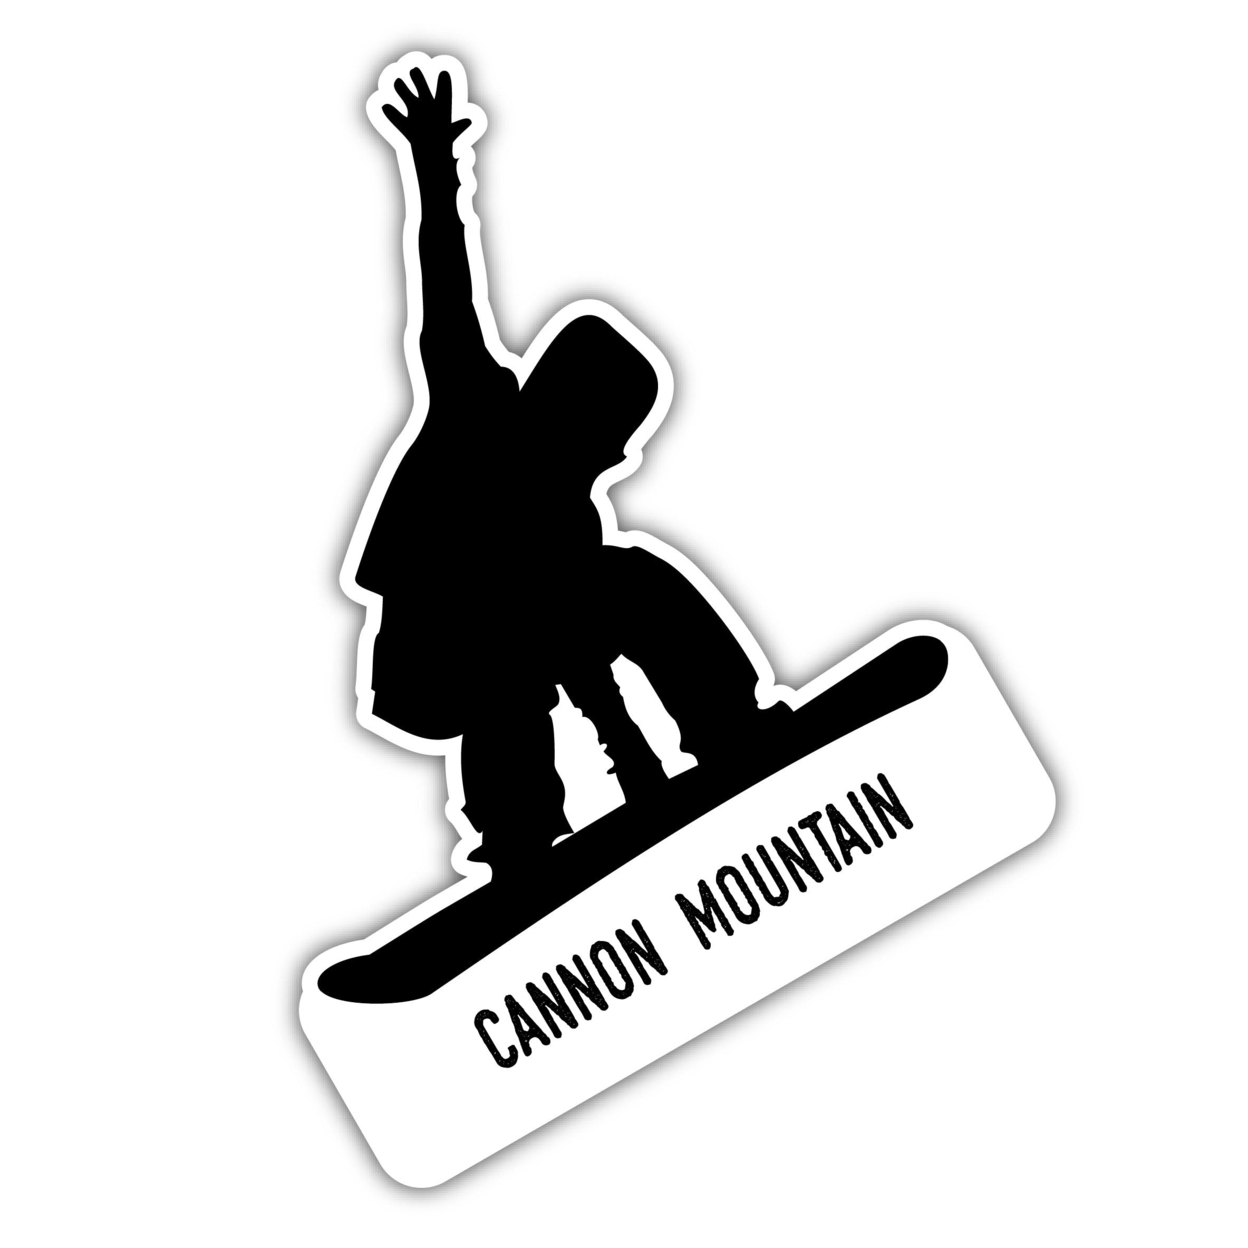 Cannon Mountain New Hampshire Ski Adventures Souvenir Approximately 5 X 2.5-Inch Vinyl Decal Sticker Goggle Design